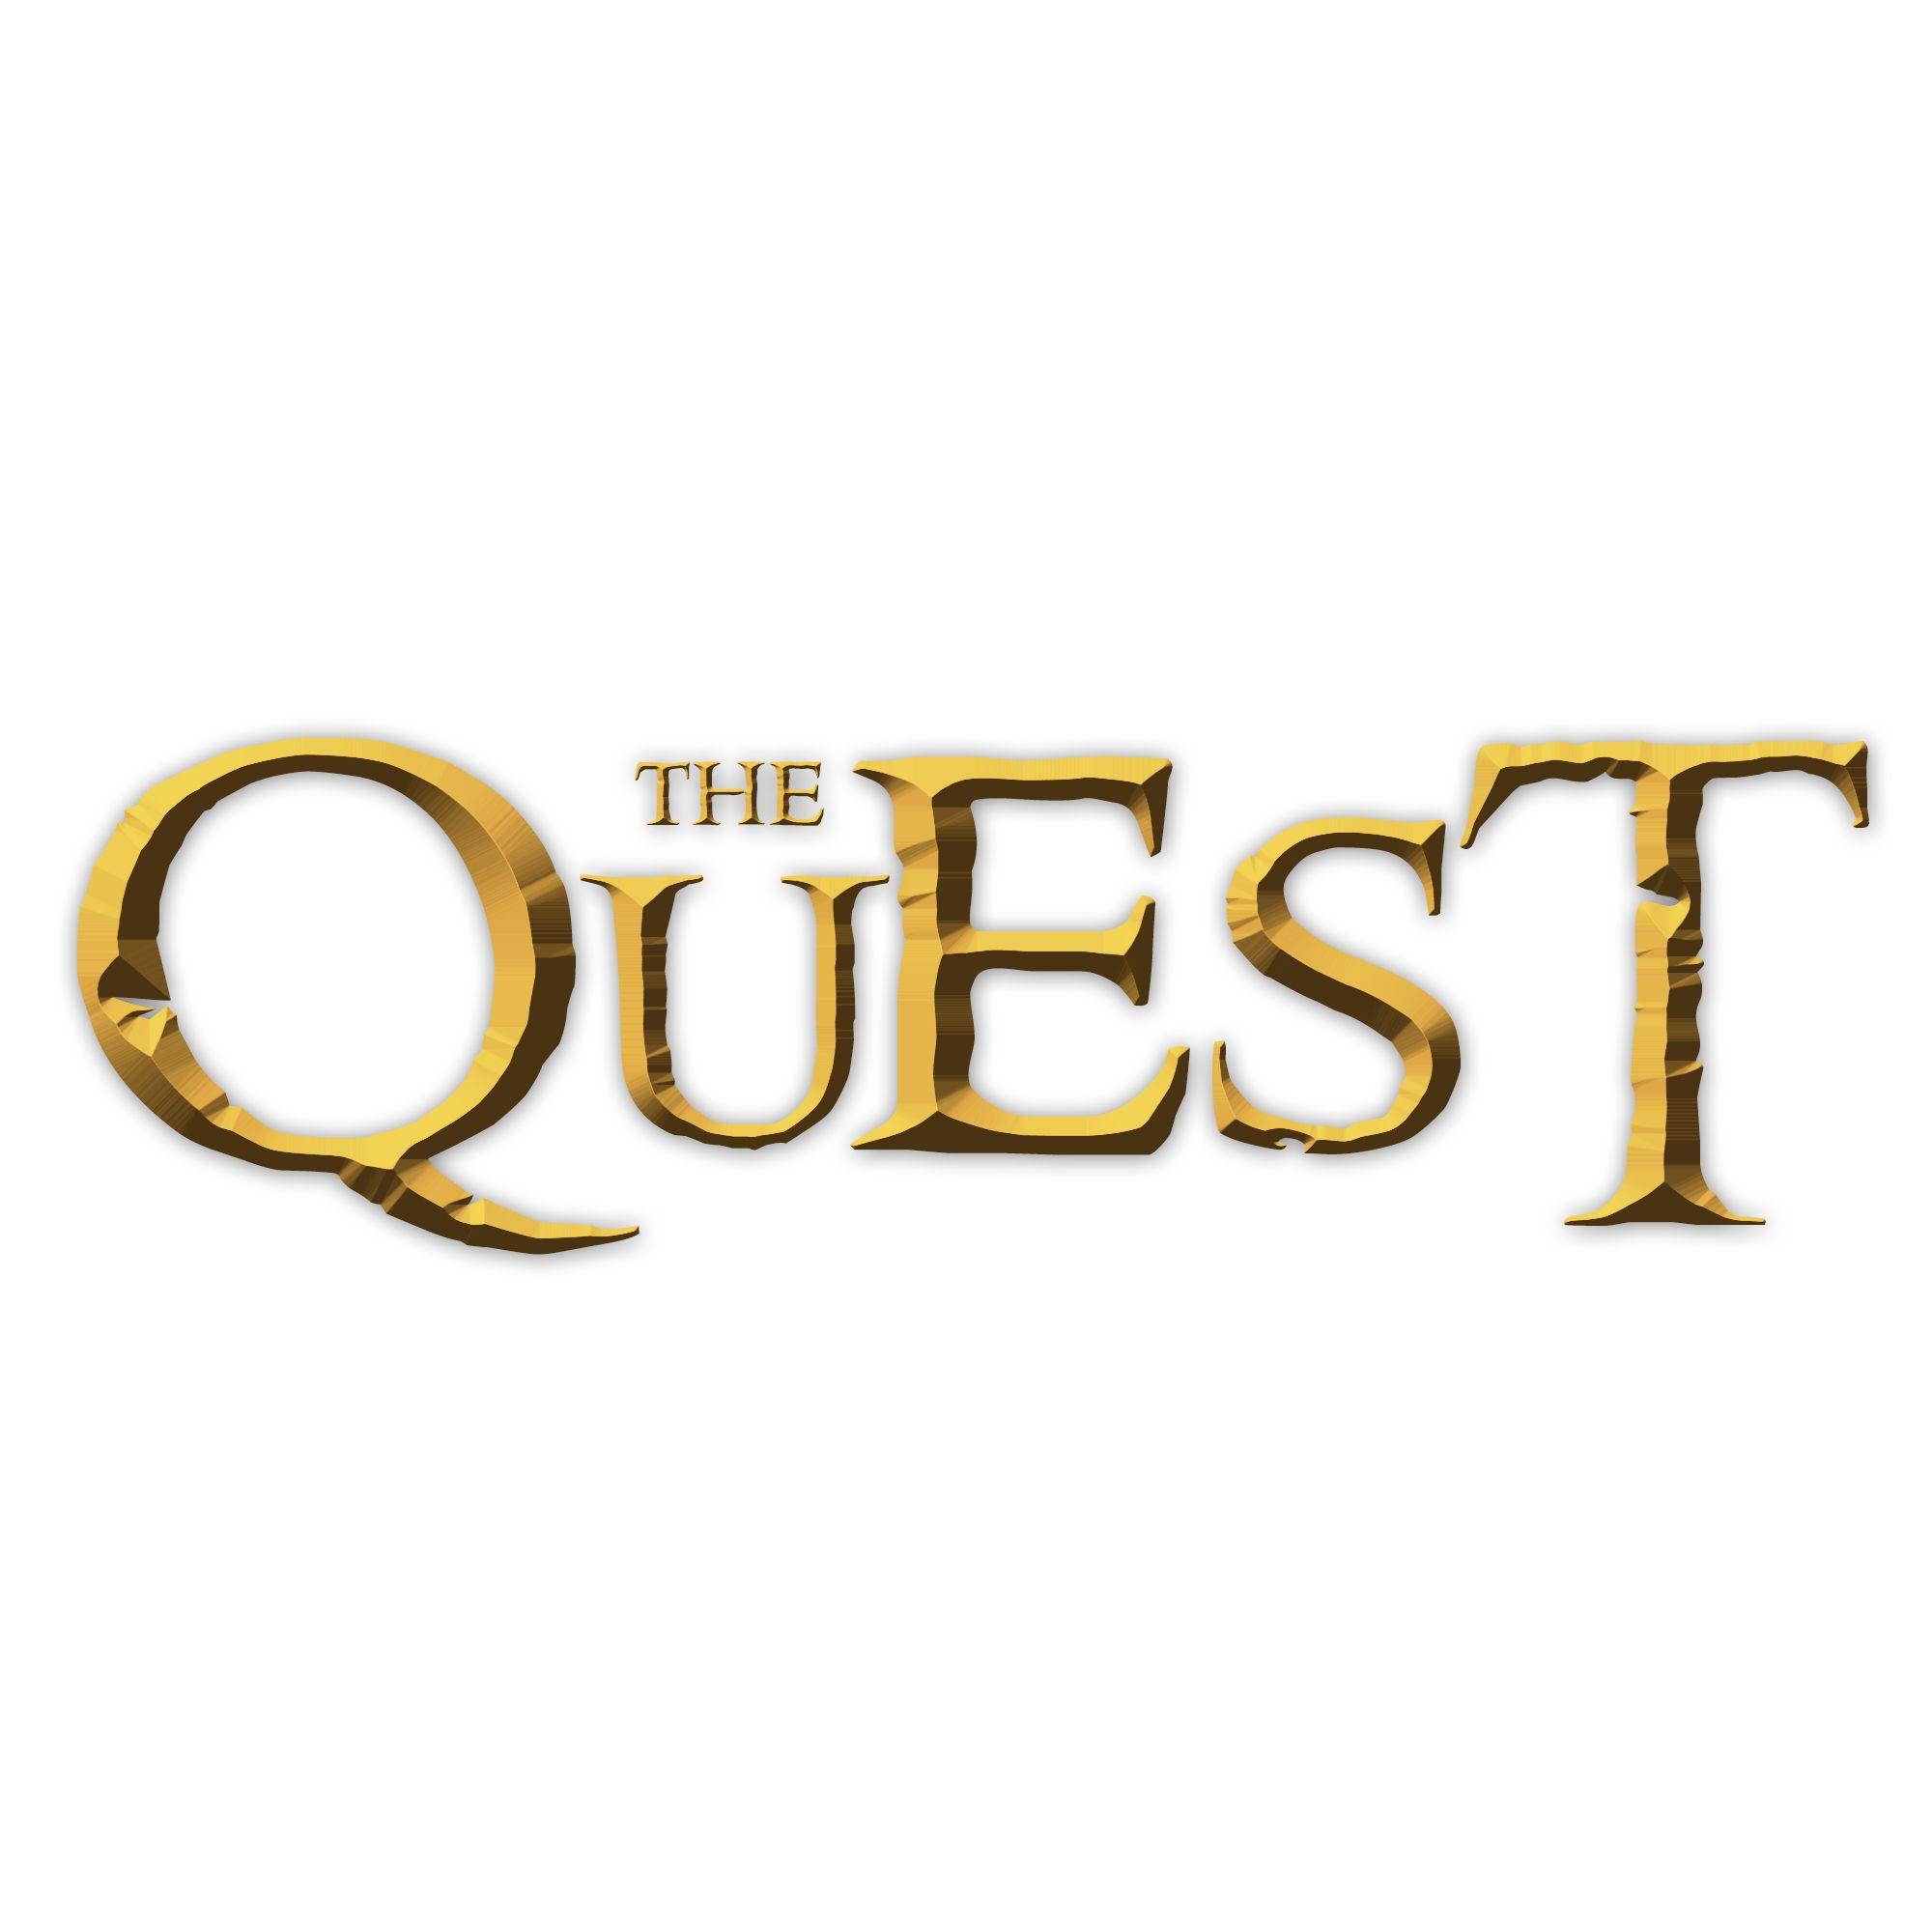 Quest Logo - The Quest logo | Snow Hill Baptist Church